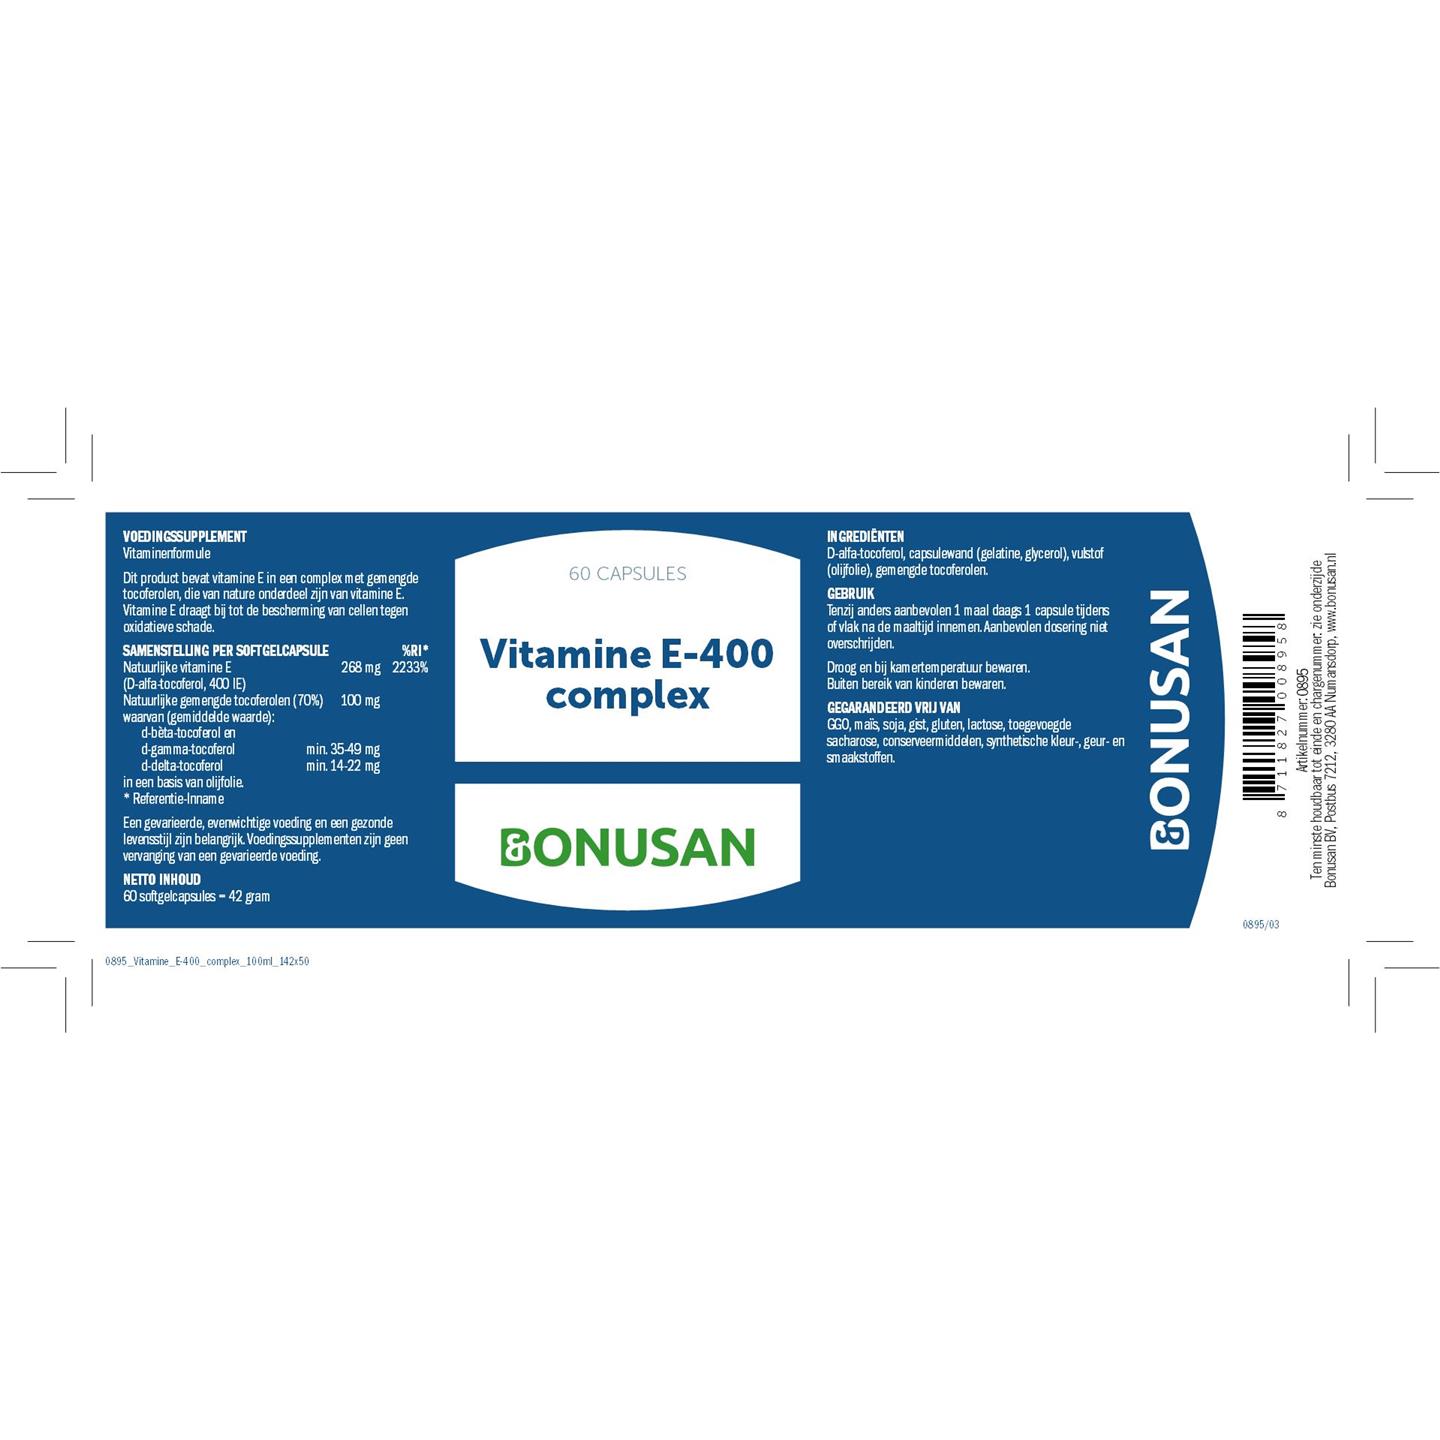 Luipaard groef Specifiek Vitamine E-400 complex (Bonusan)